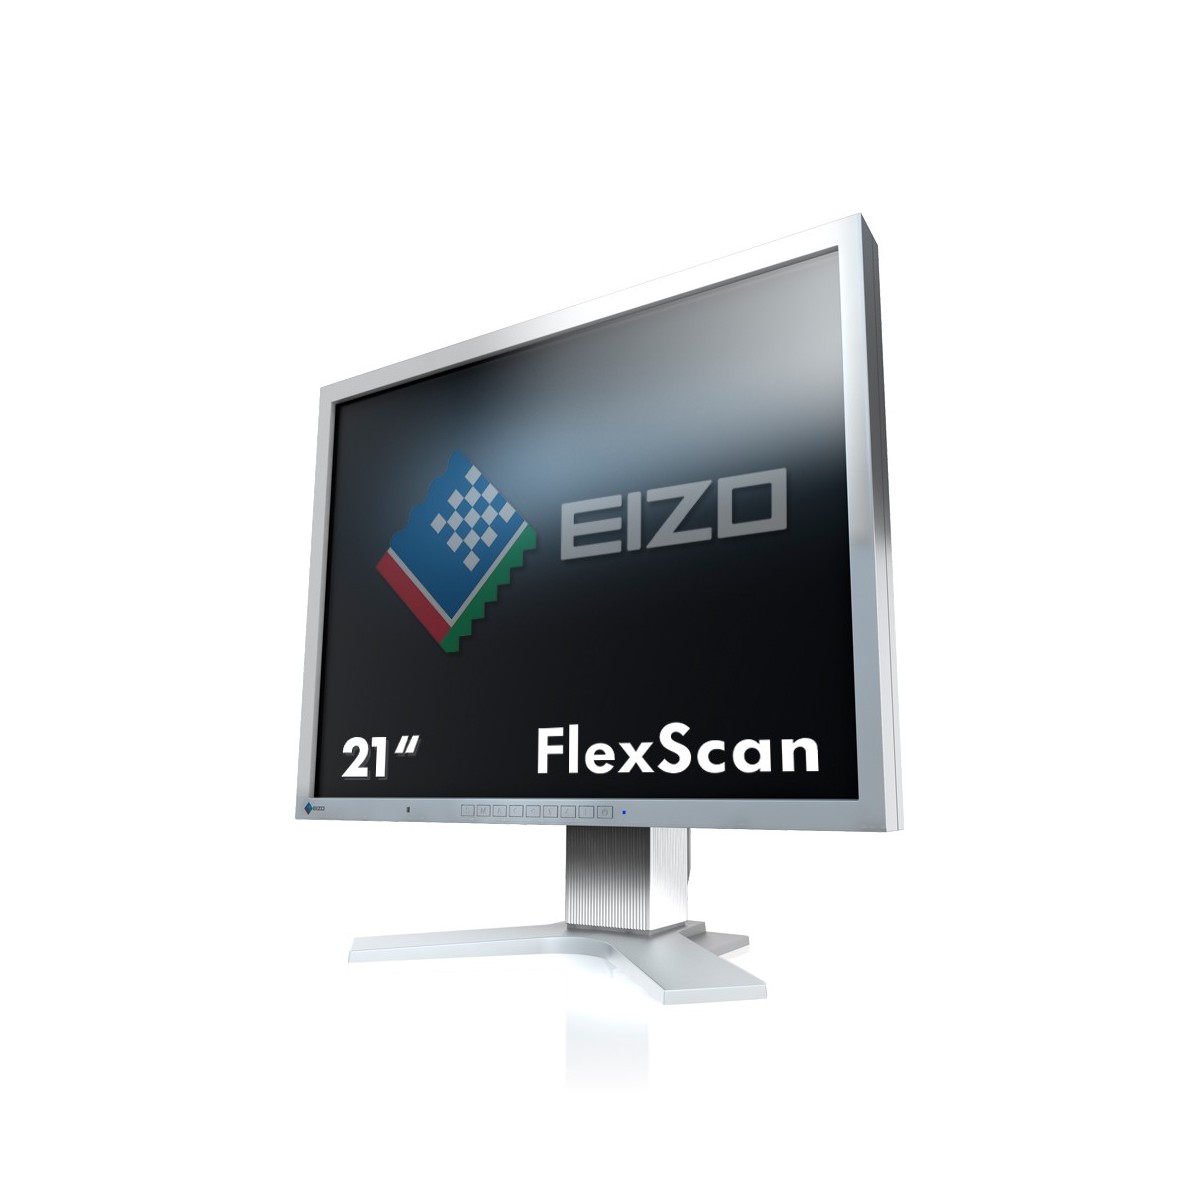 EIZO FlexScan S2133-GY - 54.1 cm (21.3) - 1600 x 1200 pixels - UXGA - LCD - 7 ms - Grey